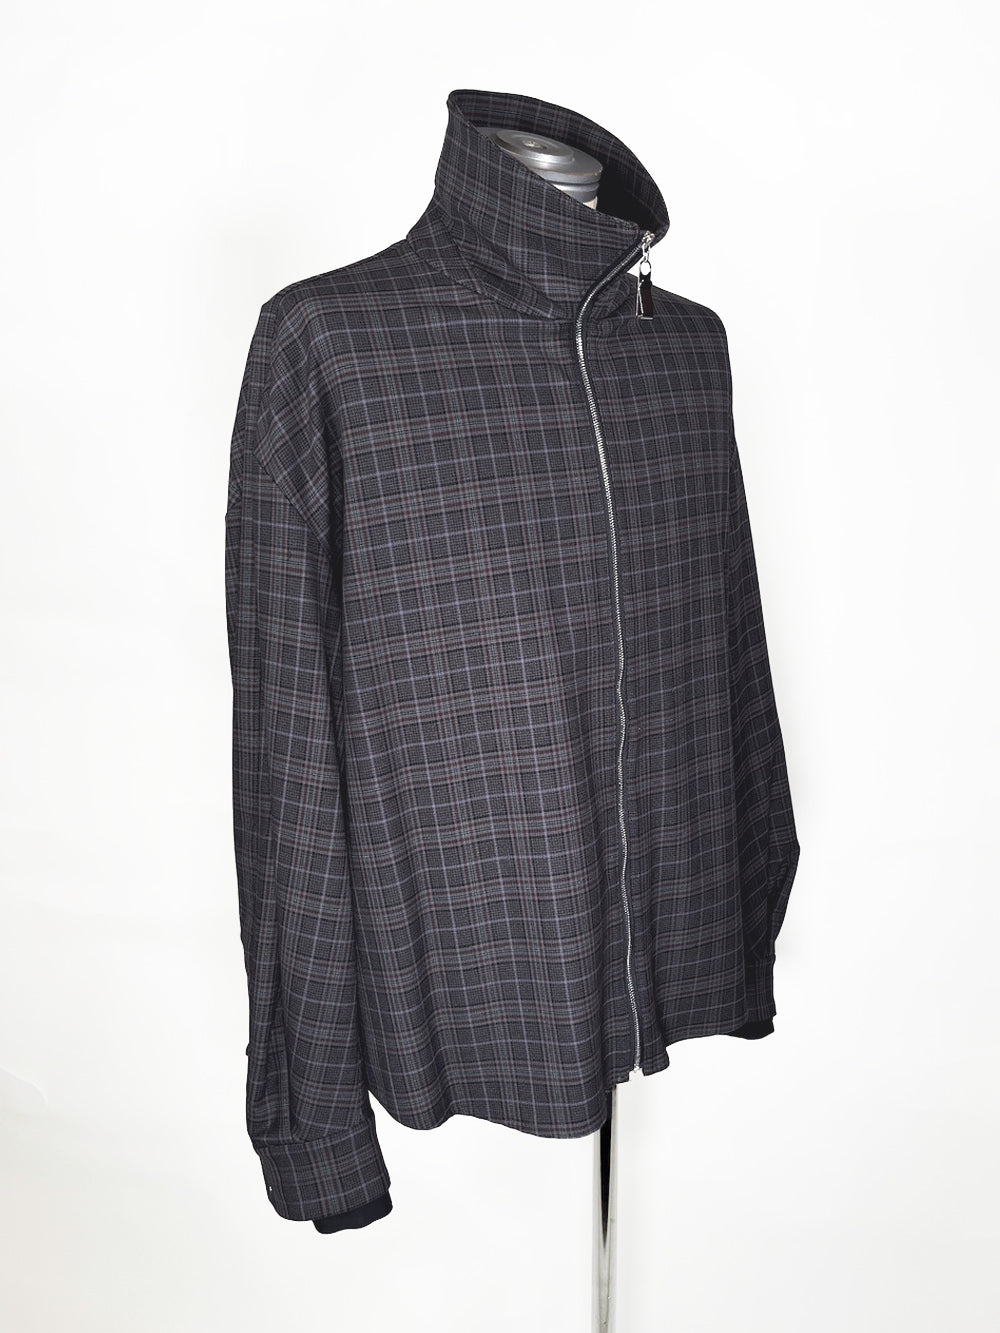 LB23AW-SHBL01-CWE-CK | 双袖运动衬衫夹克 | 格纹×黑色